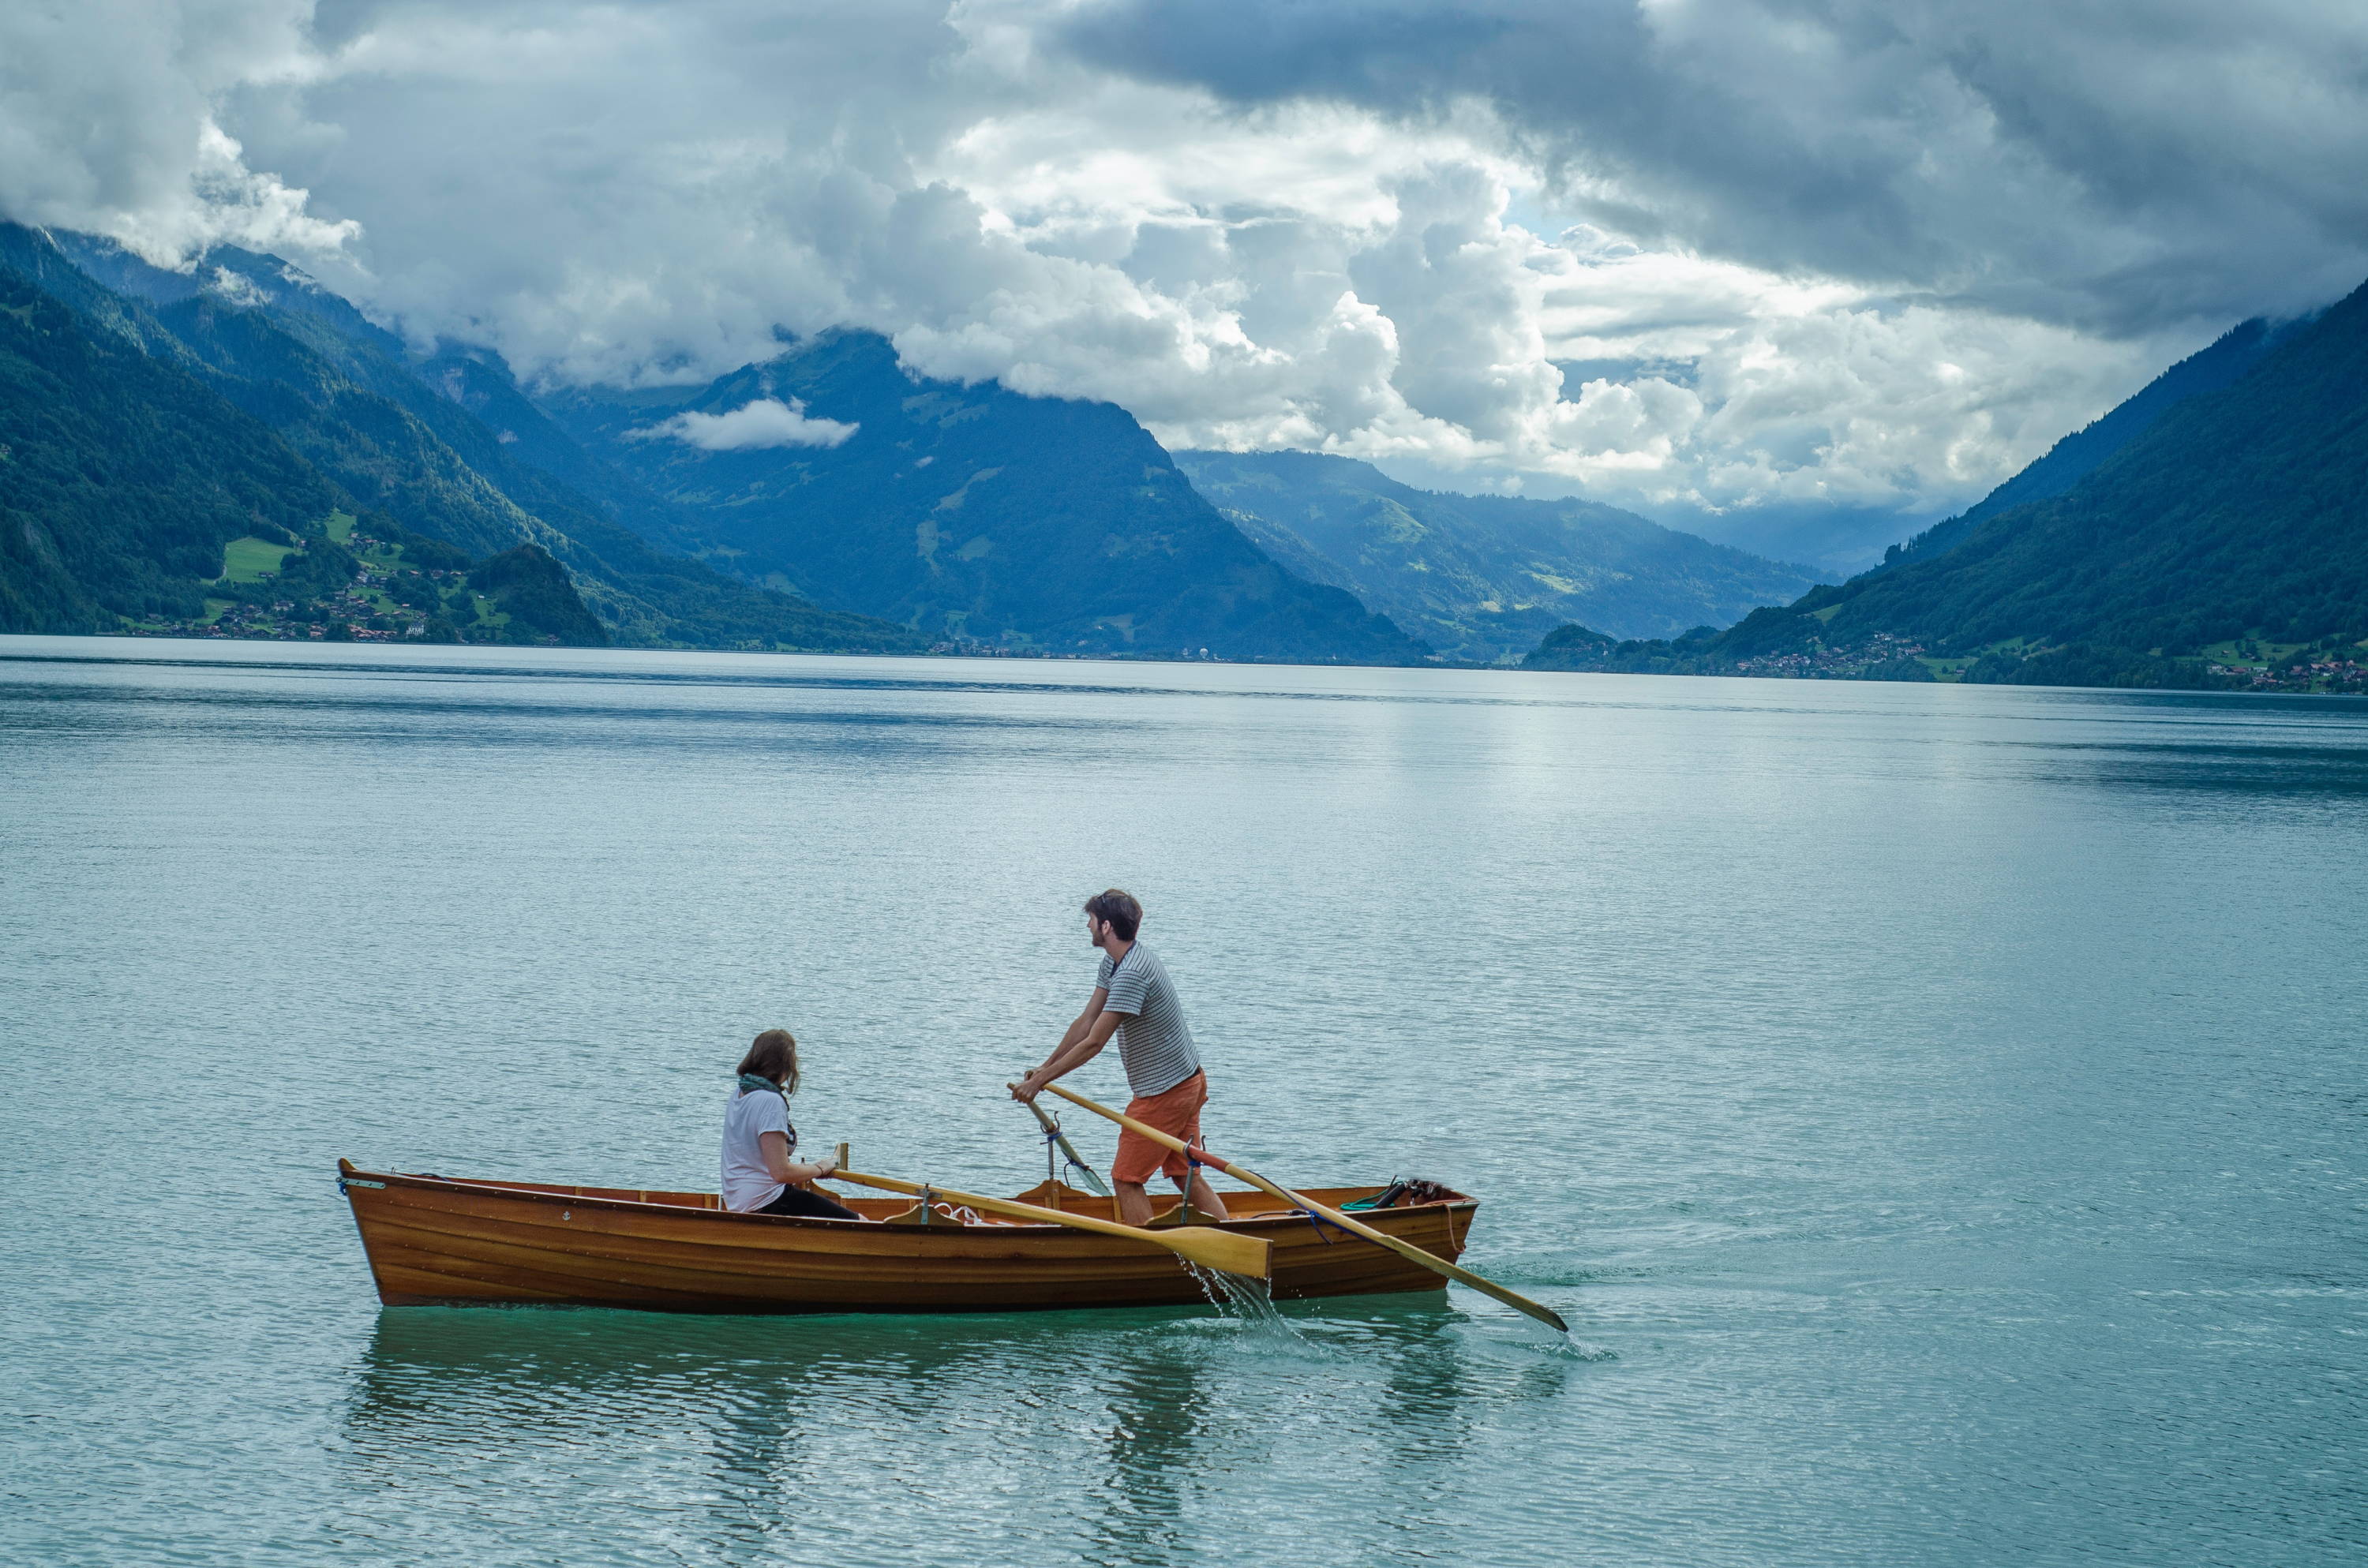 Adventures romance. Люди на узких лодках в горах. Швейцария любовь. Boat Ride. To Ride a Boat.